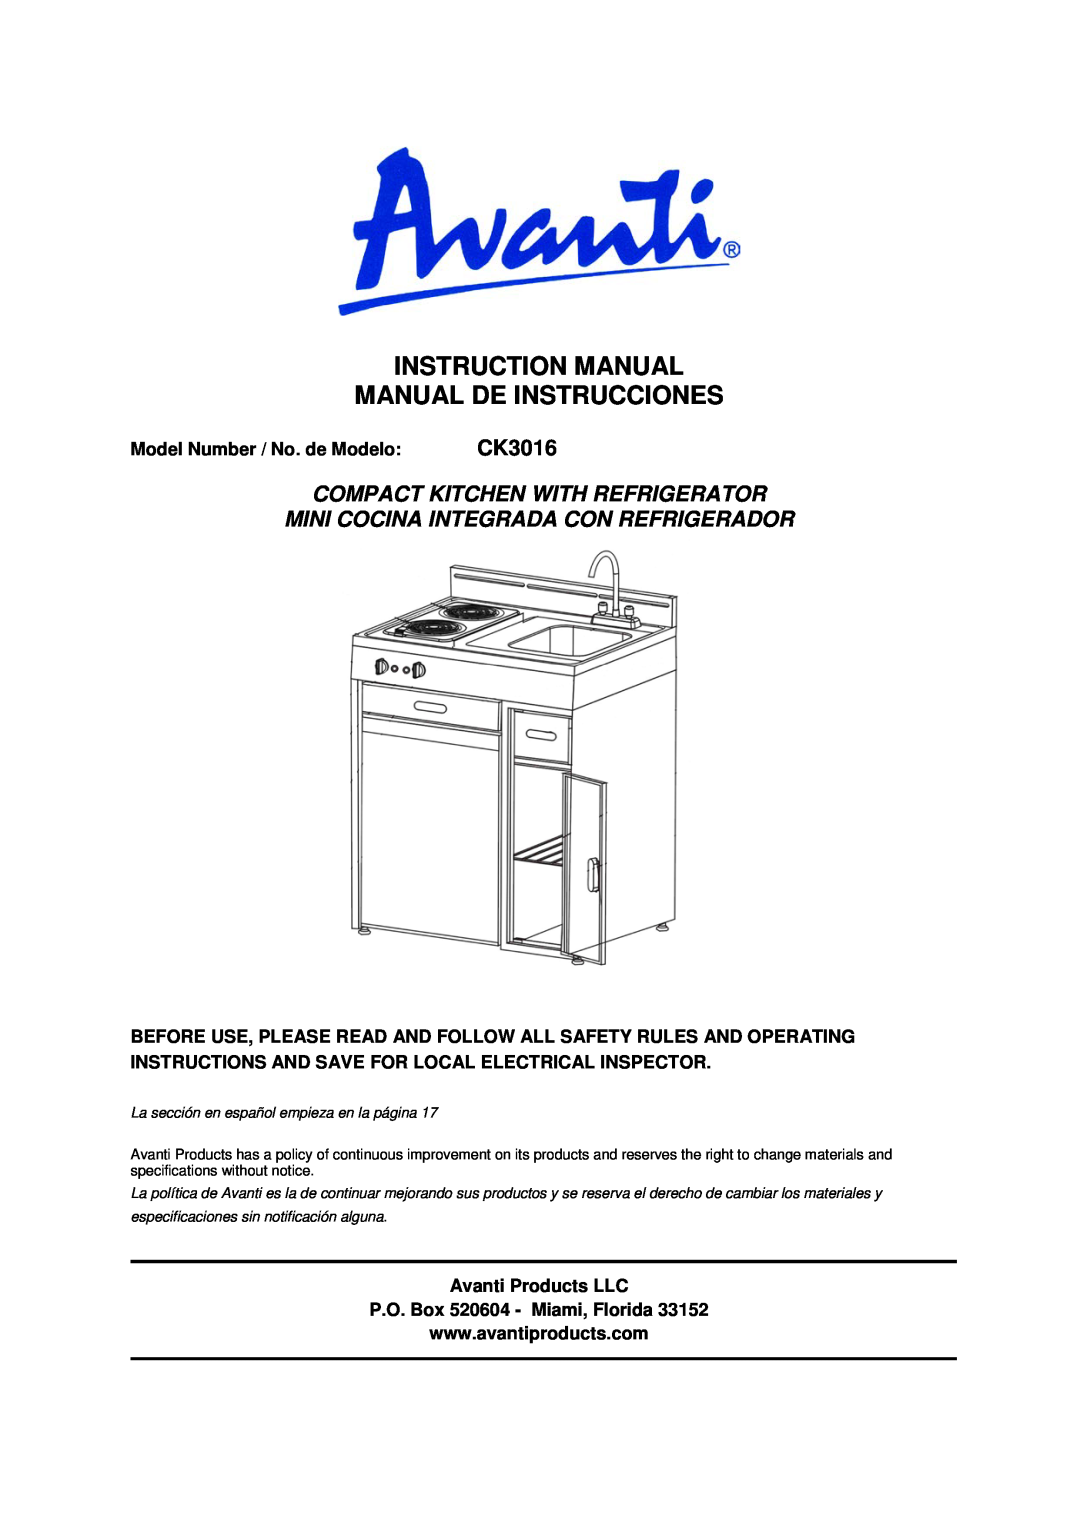 Avanti CK3016 instruction manual Compact Kitchen With Refrigerator, Mini Cocina Integrada Con Refrigerador 